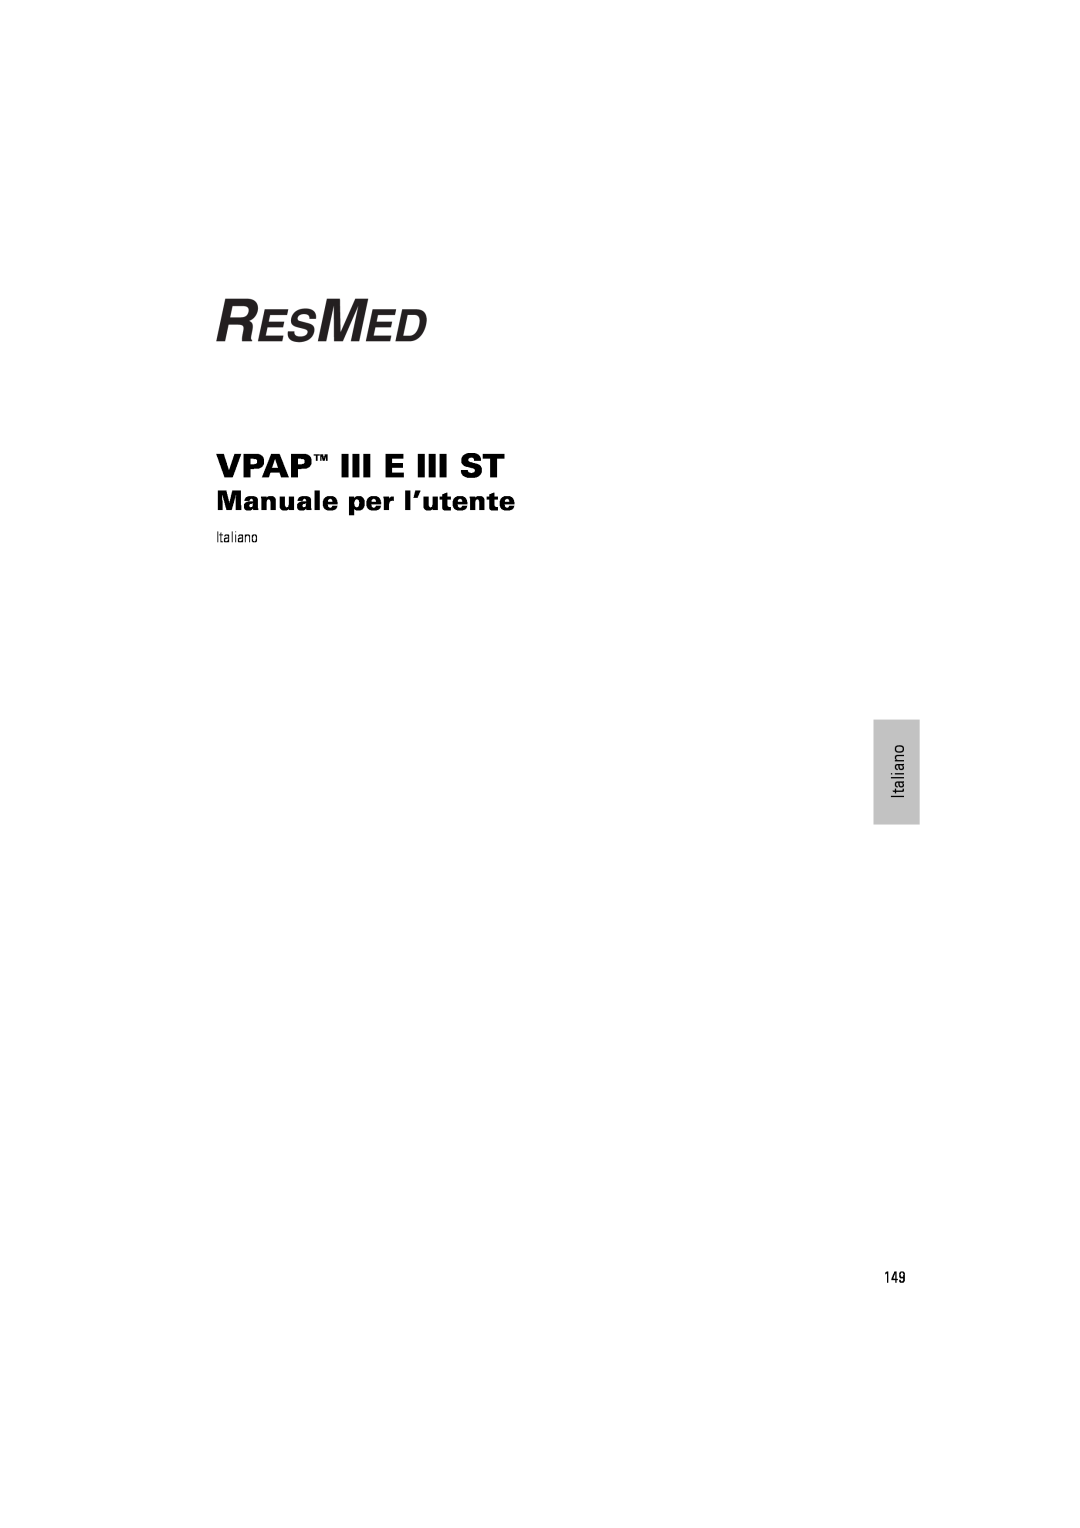 ResMed III & III ST user manual Vpap Iii E Iii St, Manuale per l’utente 